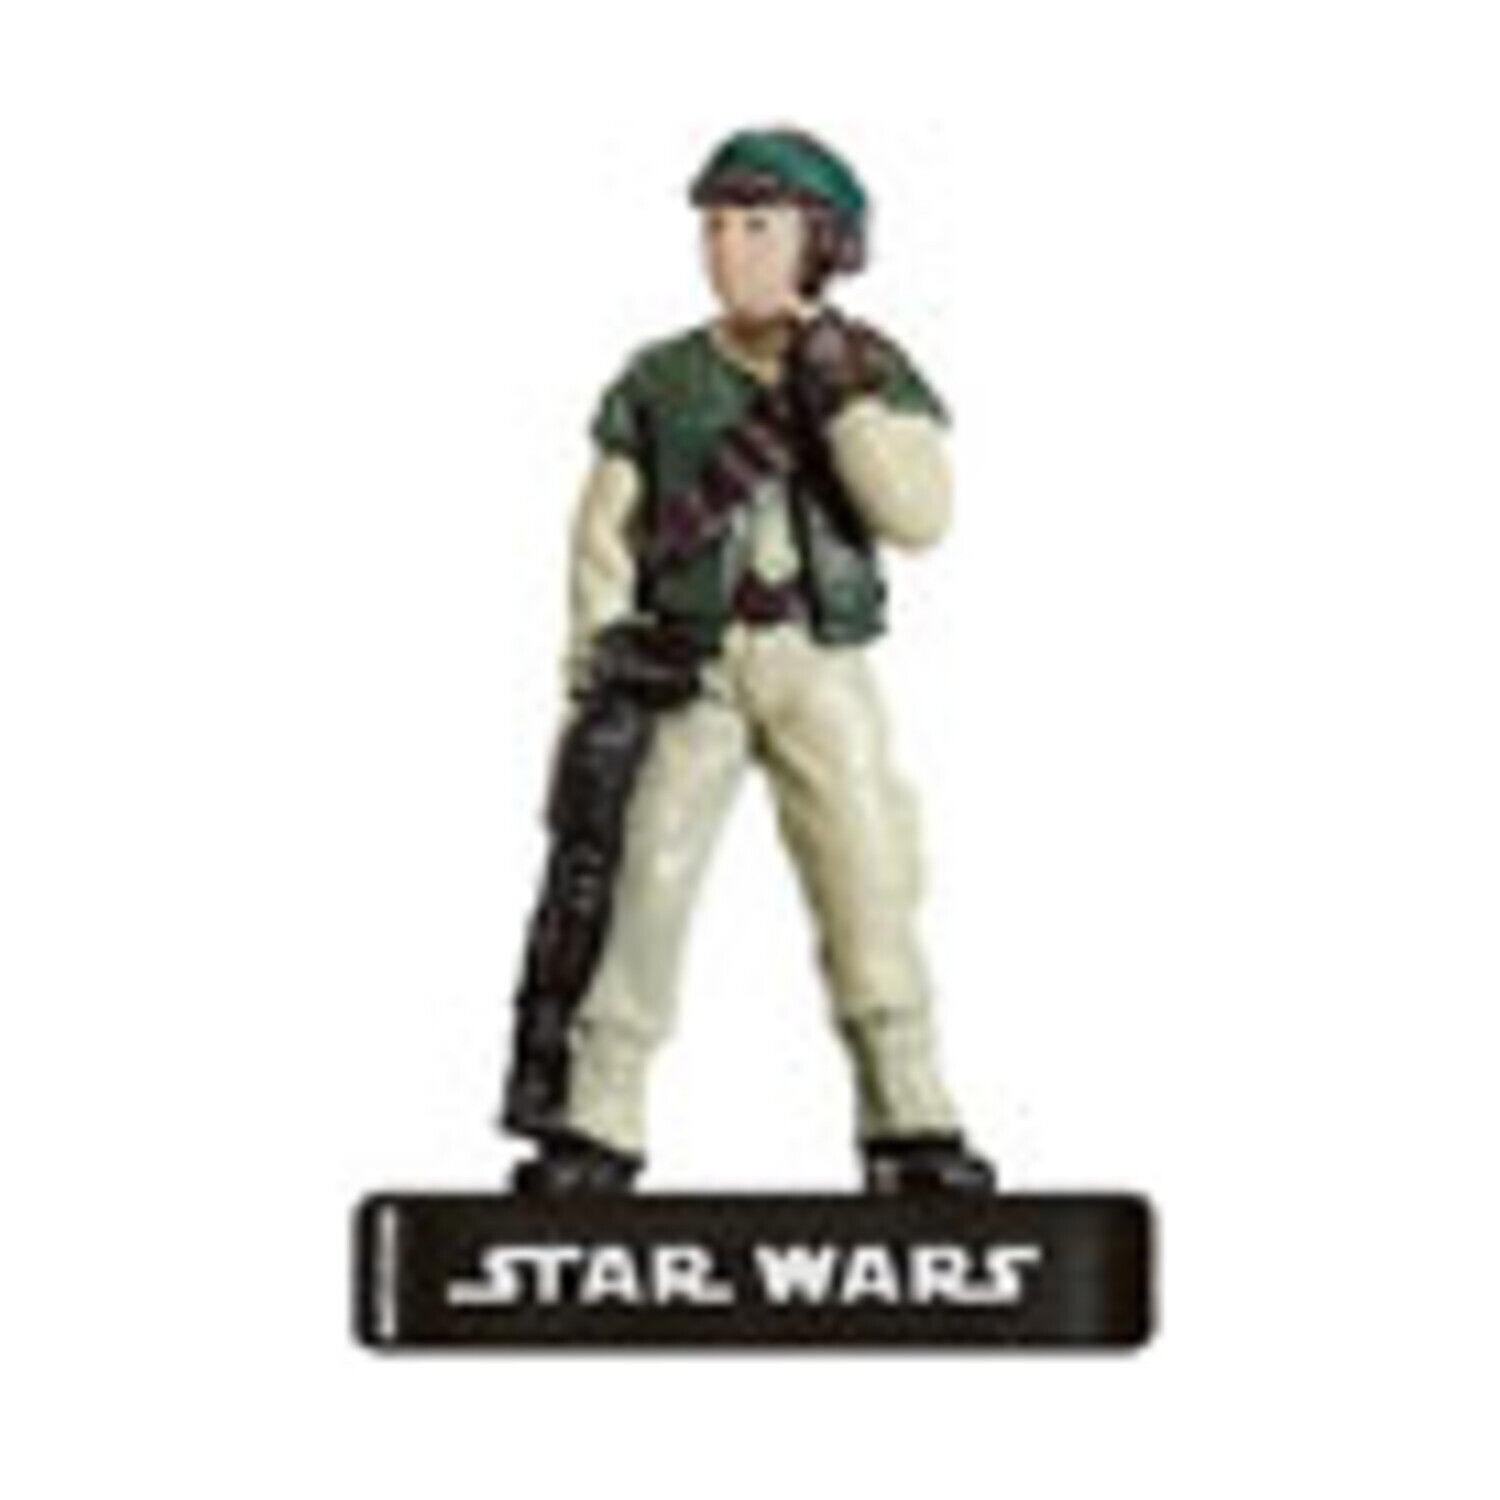 Wotc Star Wars Minis Alliance & Empire Rebel Commando (c) Nm